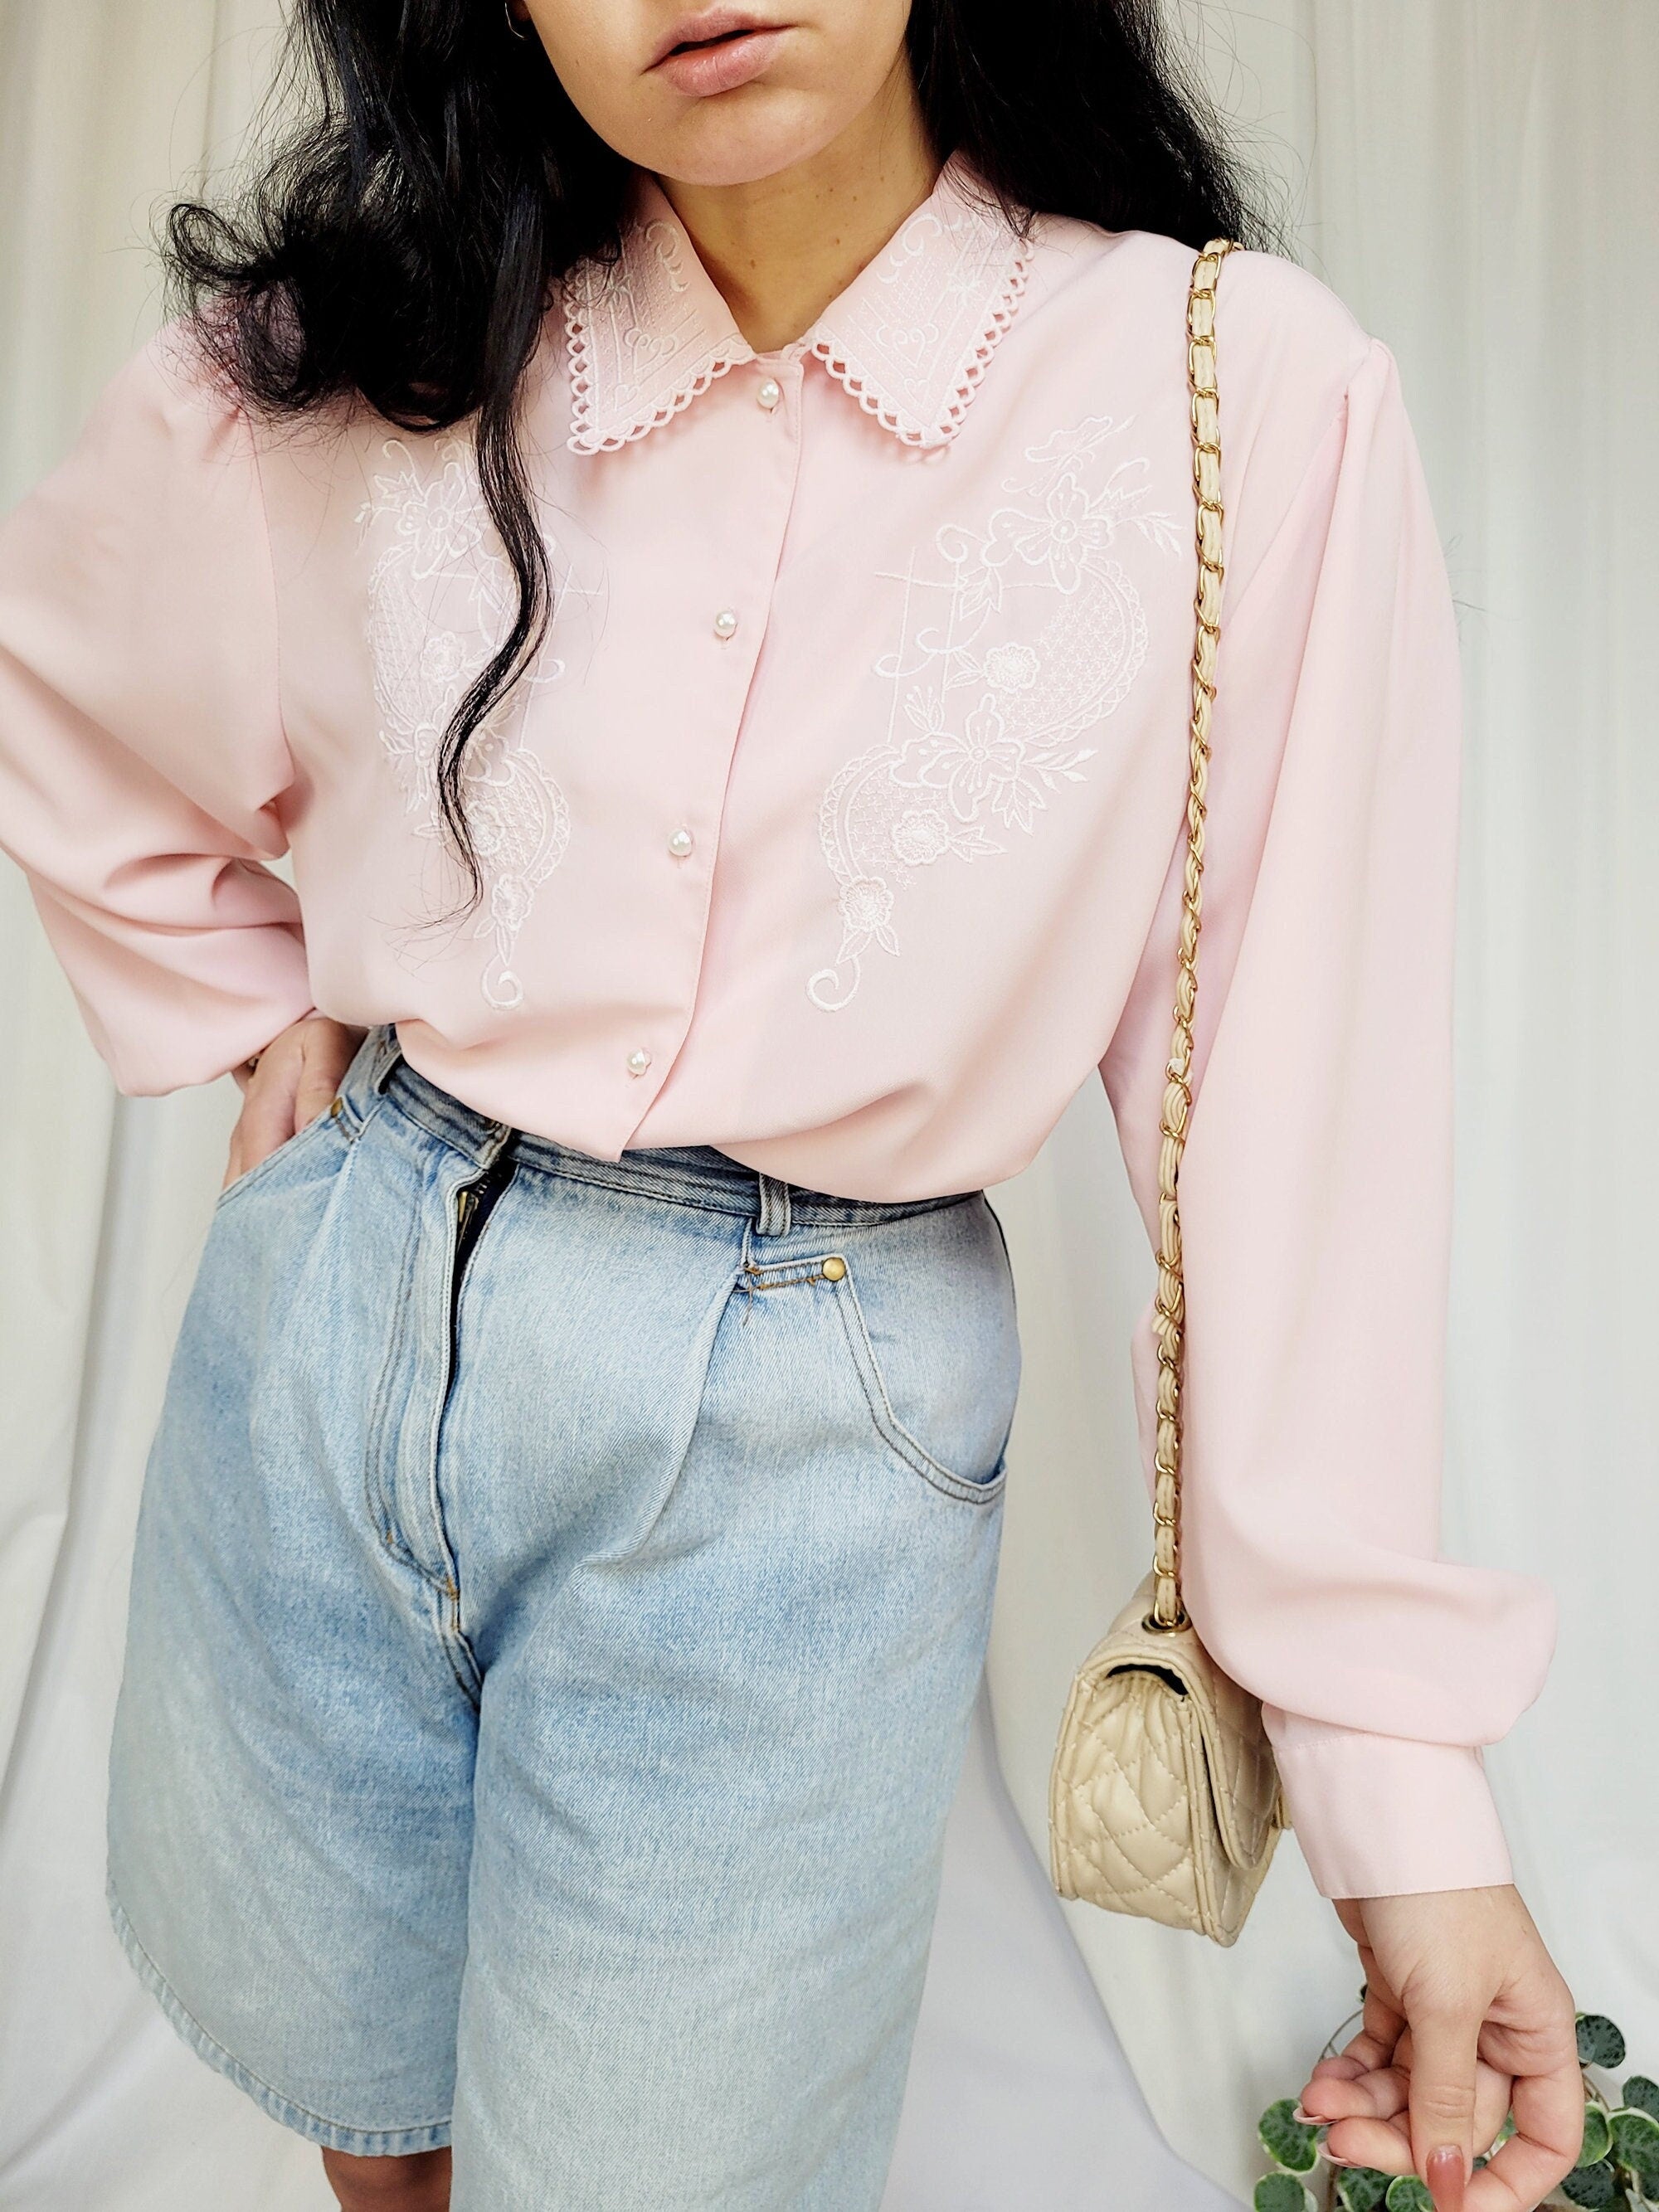 Vintage 80s pastel pink embroidered minimalist shirt blouse